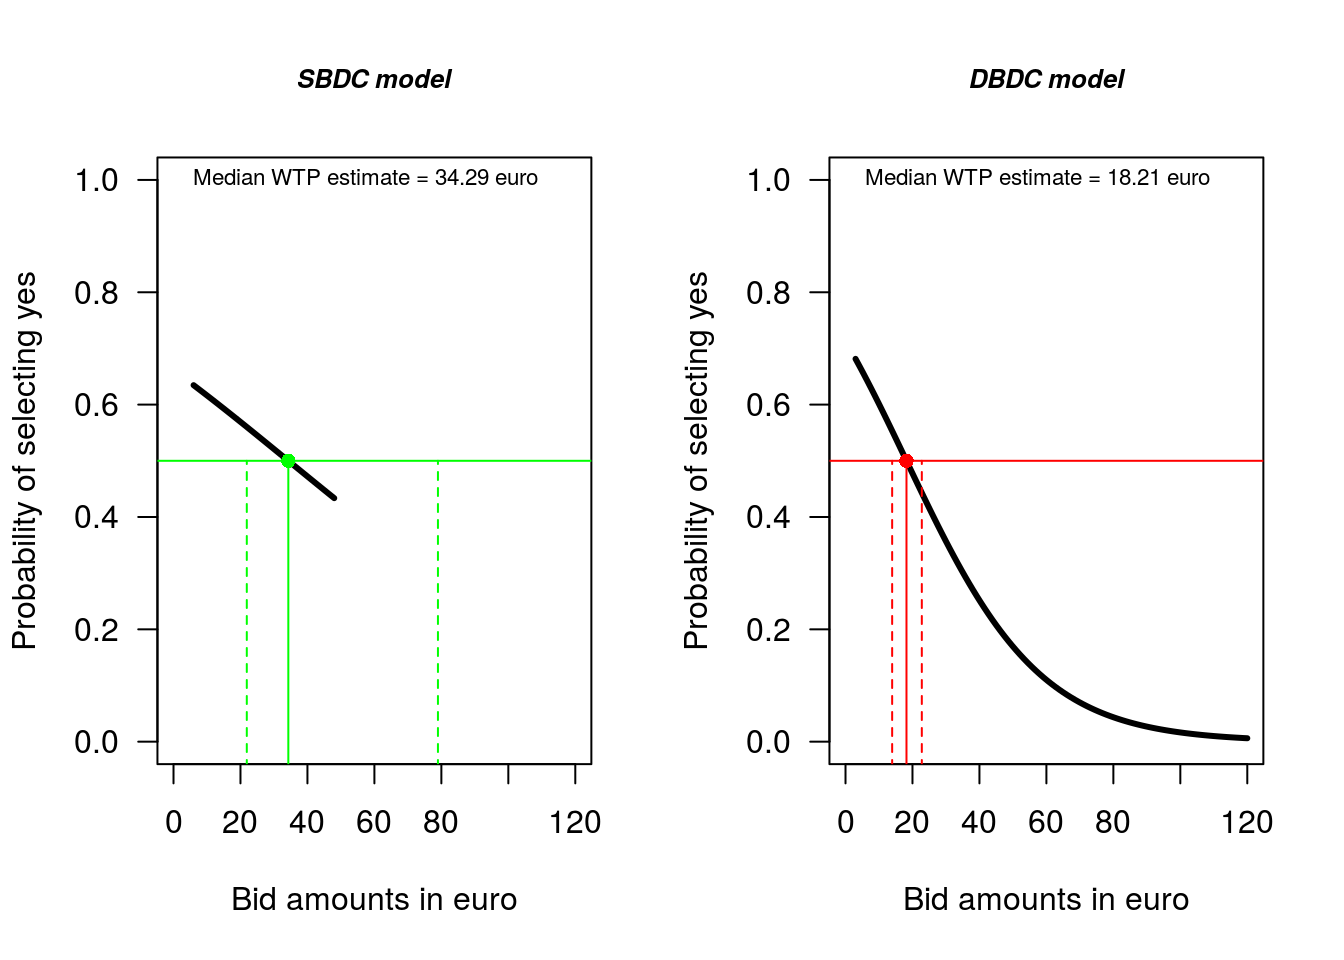 Comparison of simple and full model WTP estimates